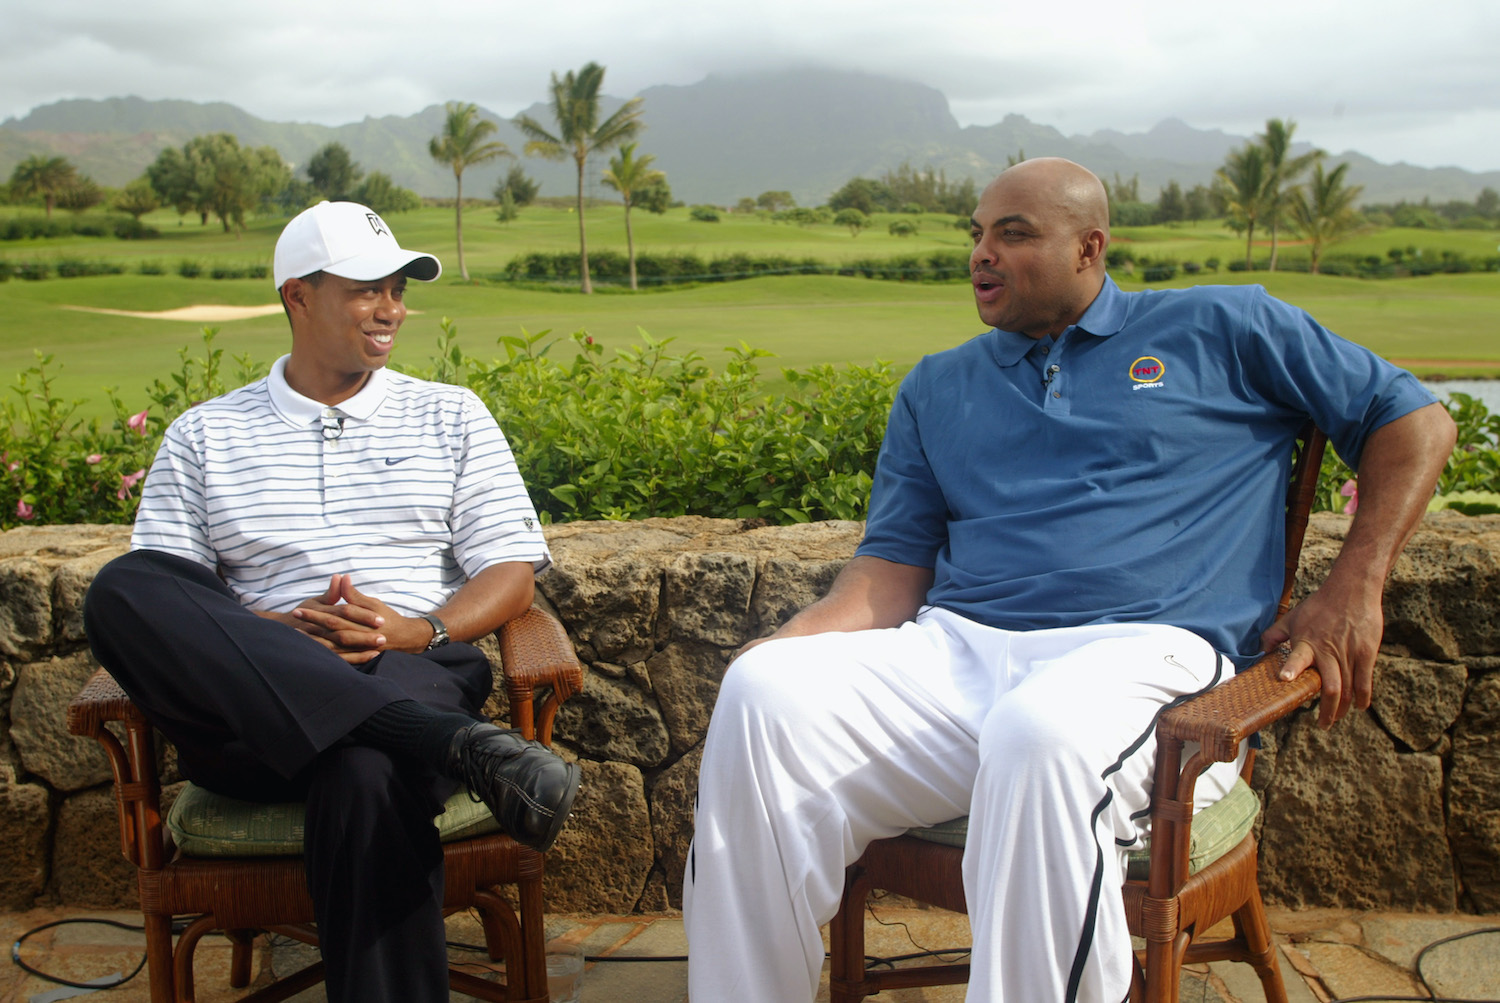 Former NBA star Charles Barkley (R) and pro golfer Tiger Woods (L) sit together in 2002.